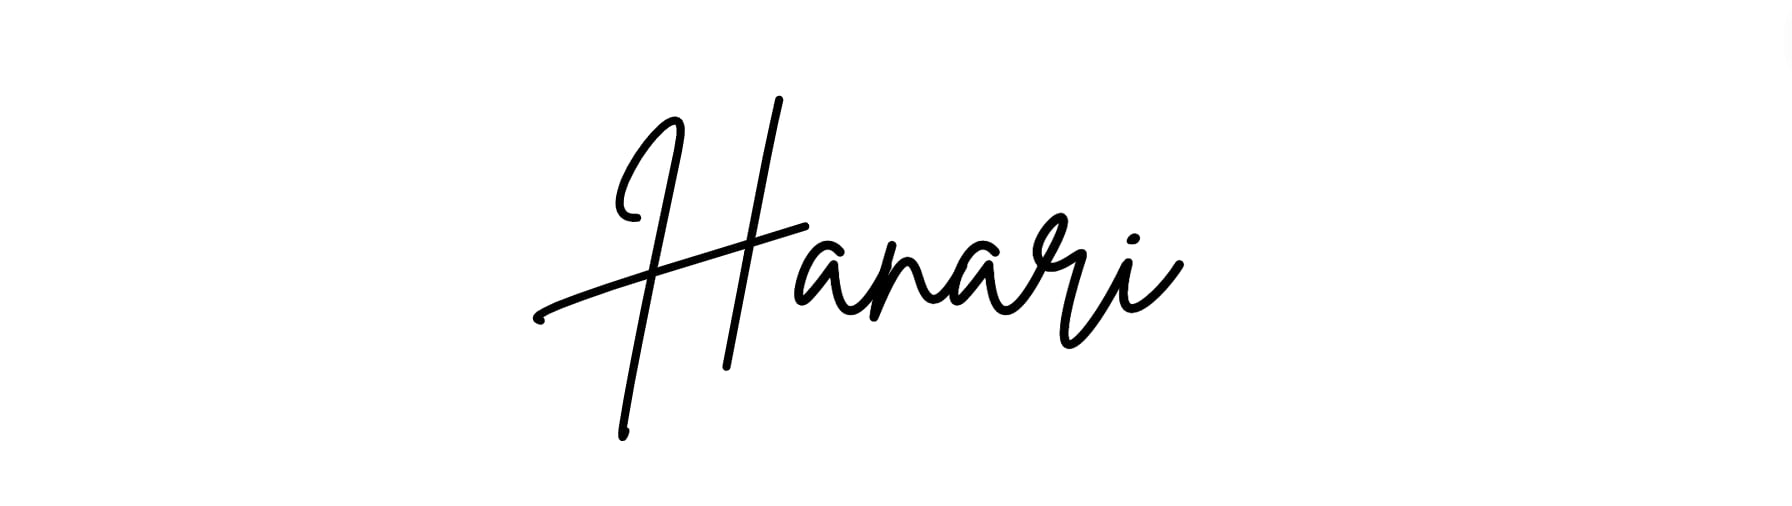 Hanari